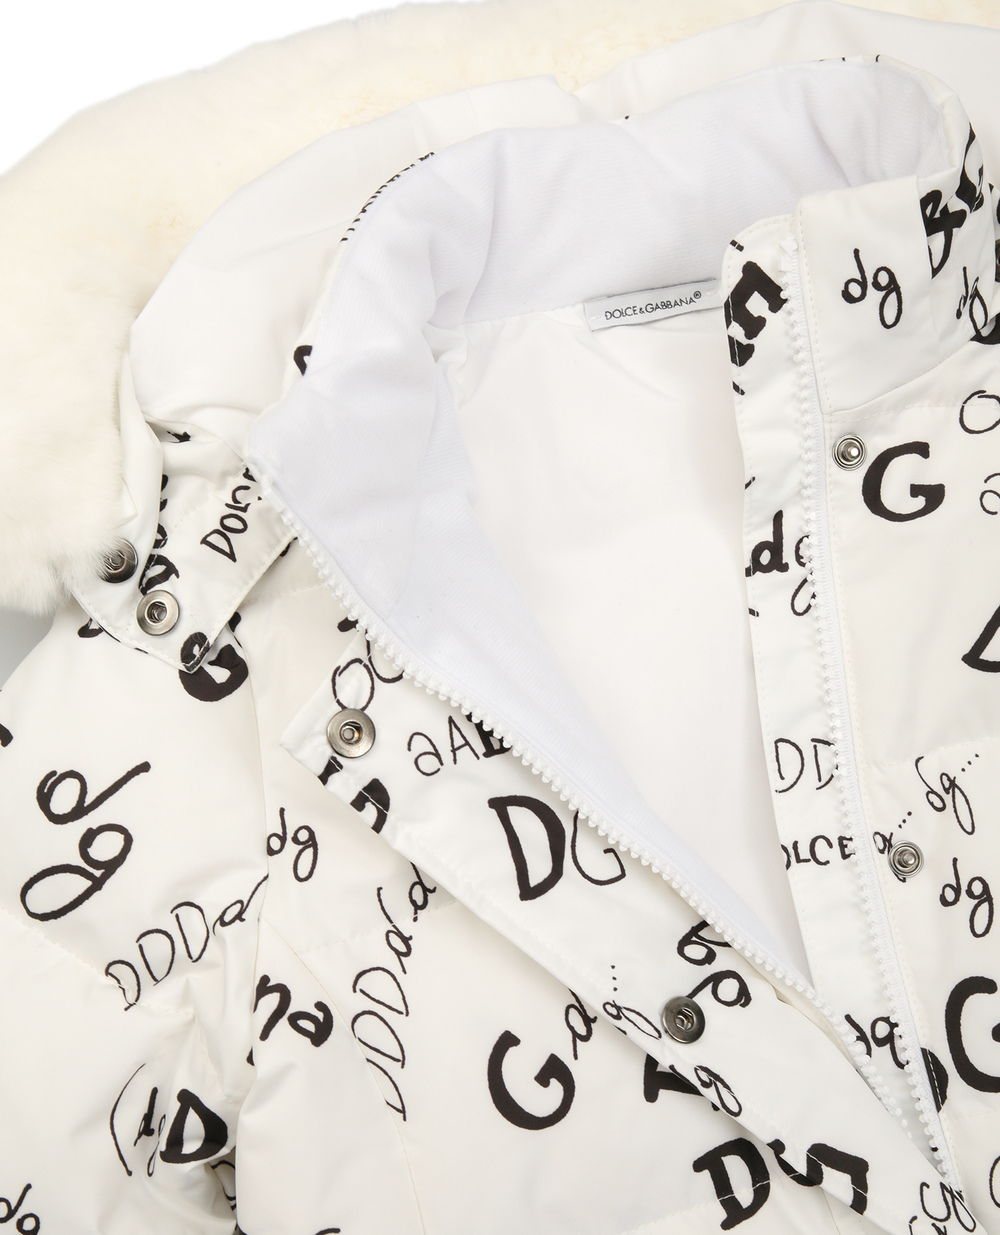 Пуховик Dolce&Gabbana Kids L5JBIC-FSSER-B, белый цвет • Купить в интернет-магазине Kameron